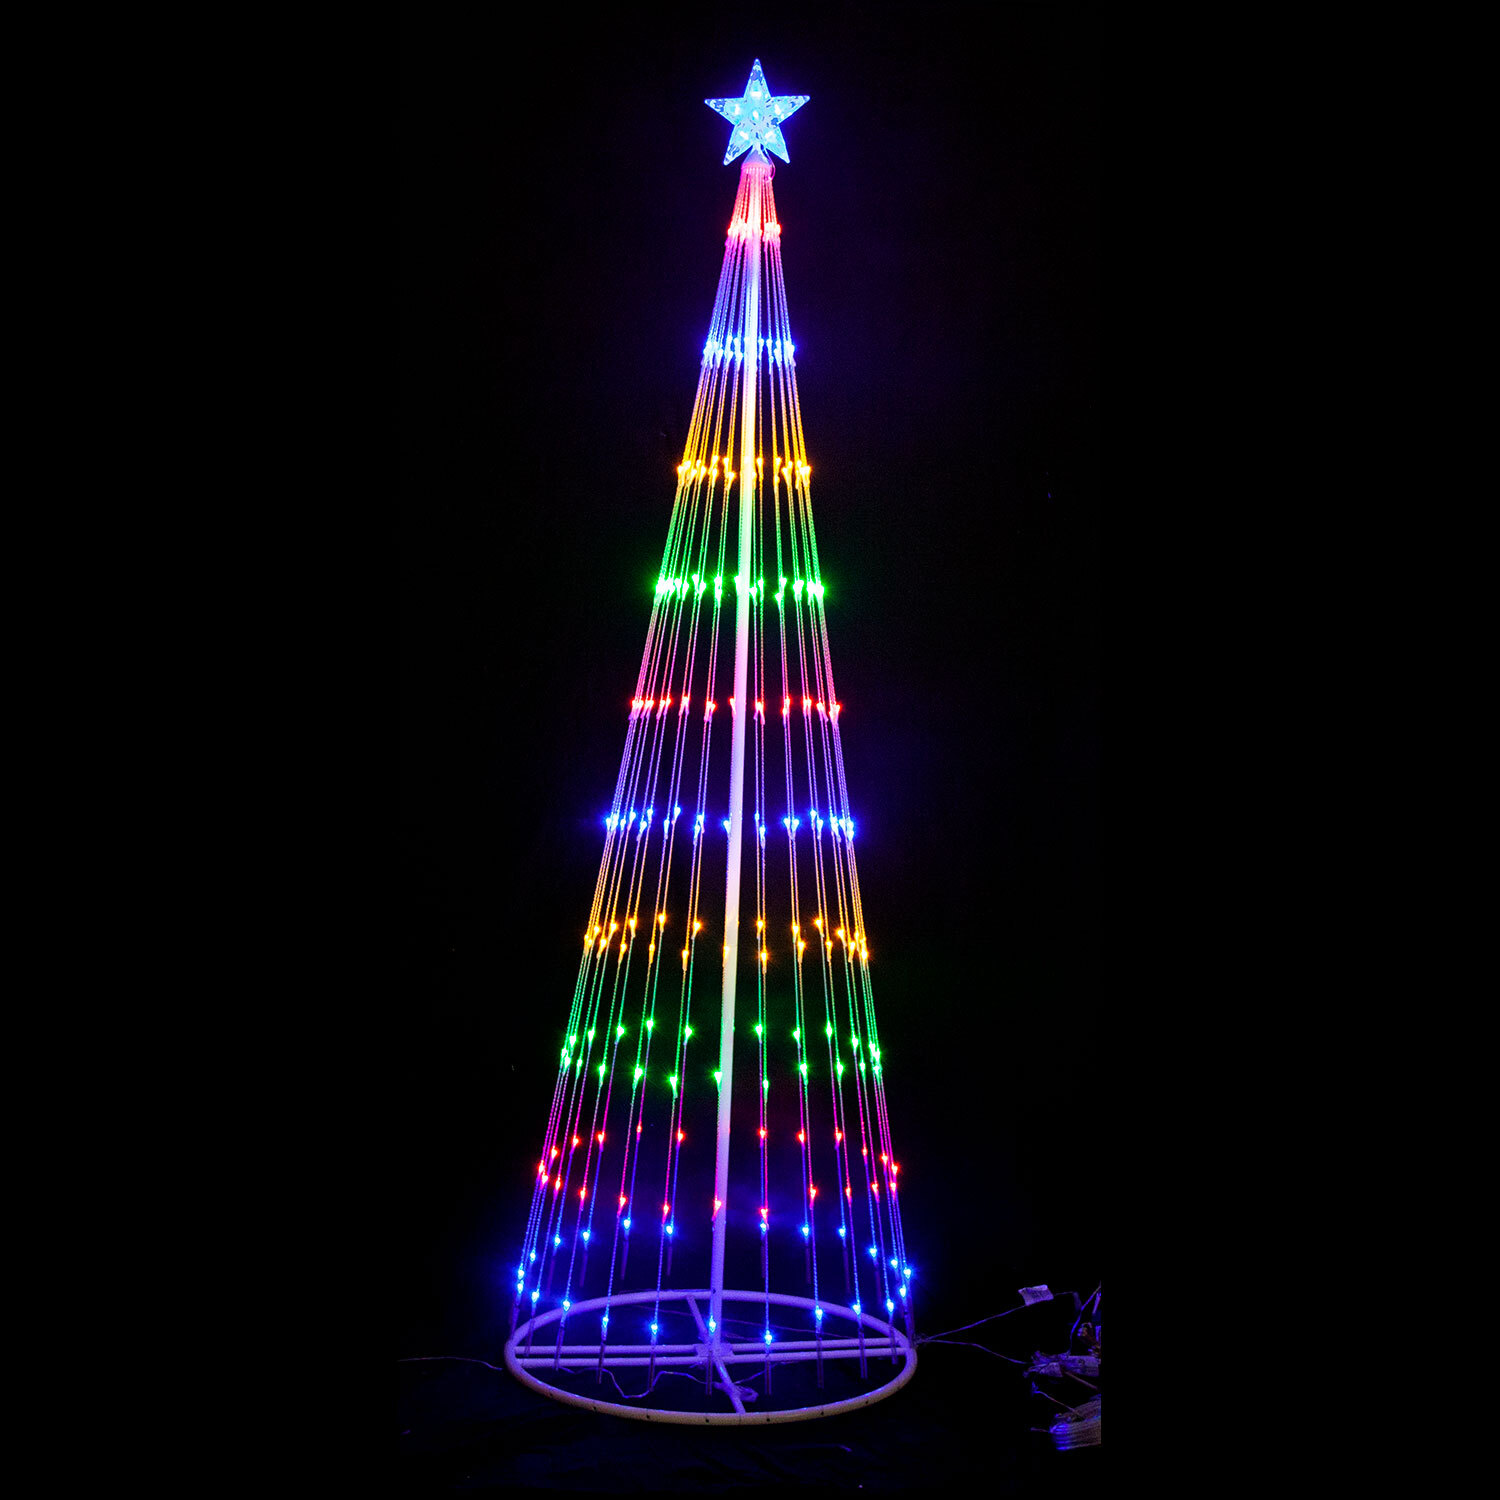 Circling LED Light Cone Shape Christmas Tree with Lighting Star | eBay